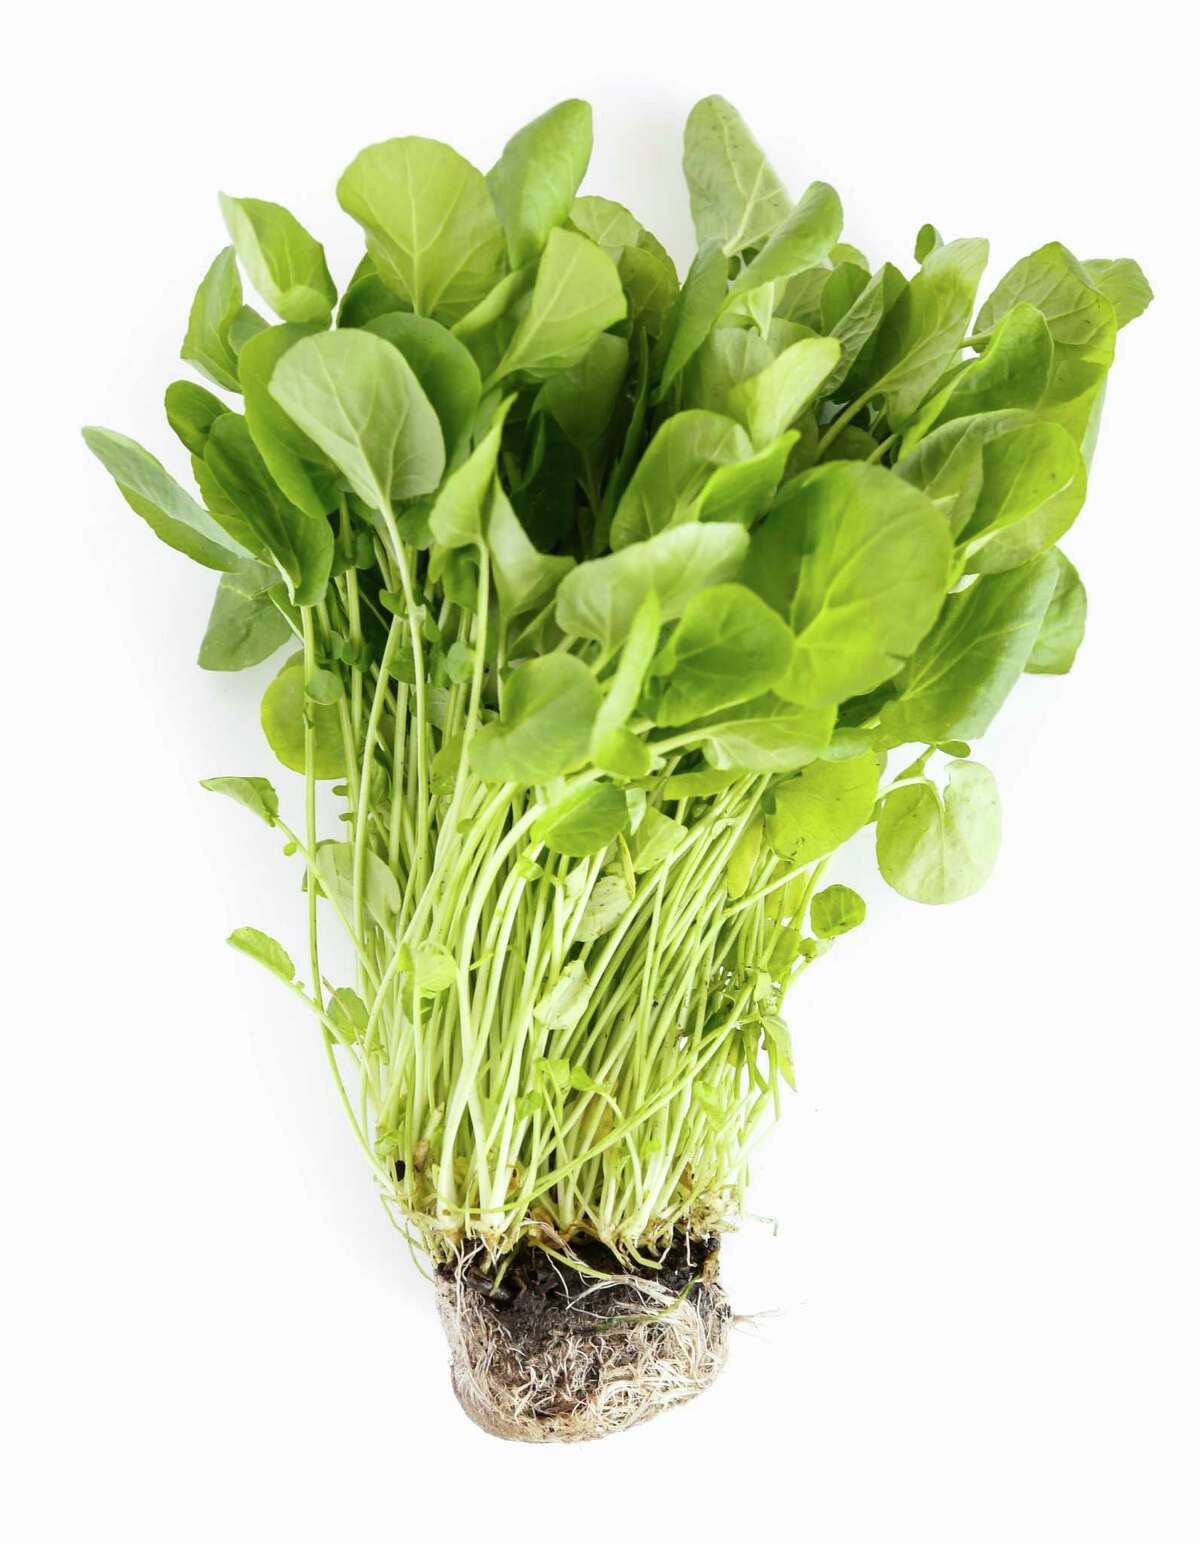 Watercress is a nutrient-dense, versatile vegetable.